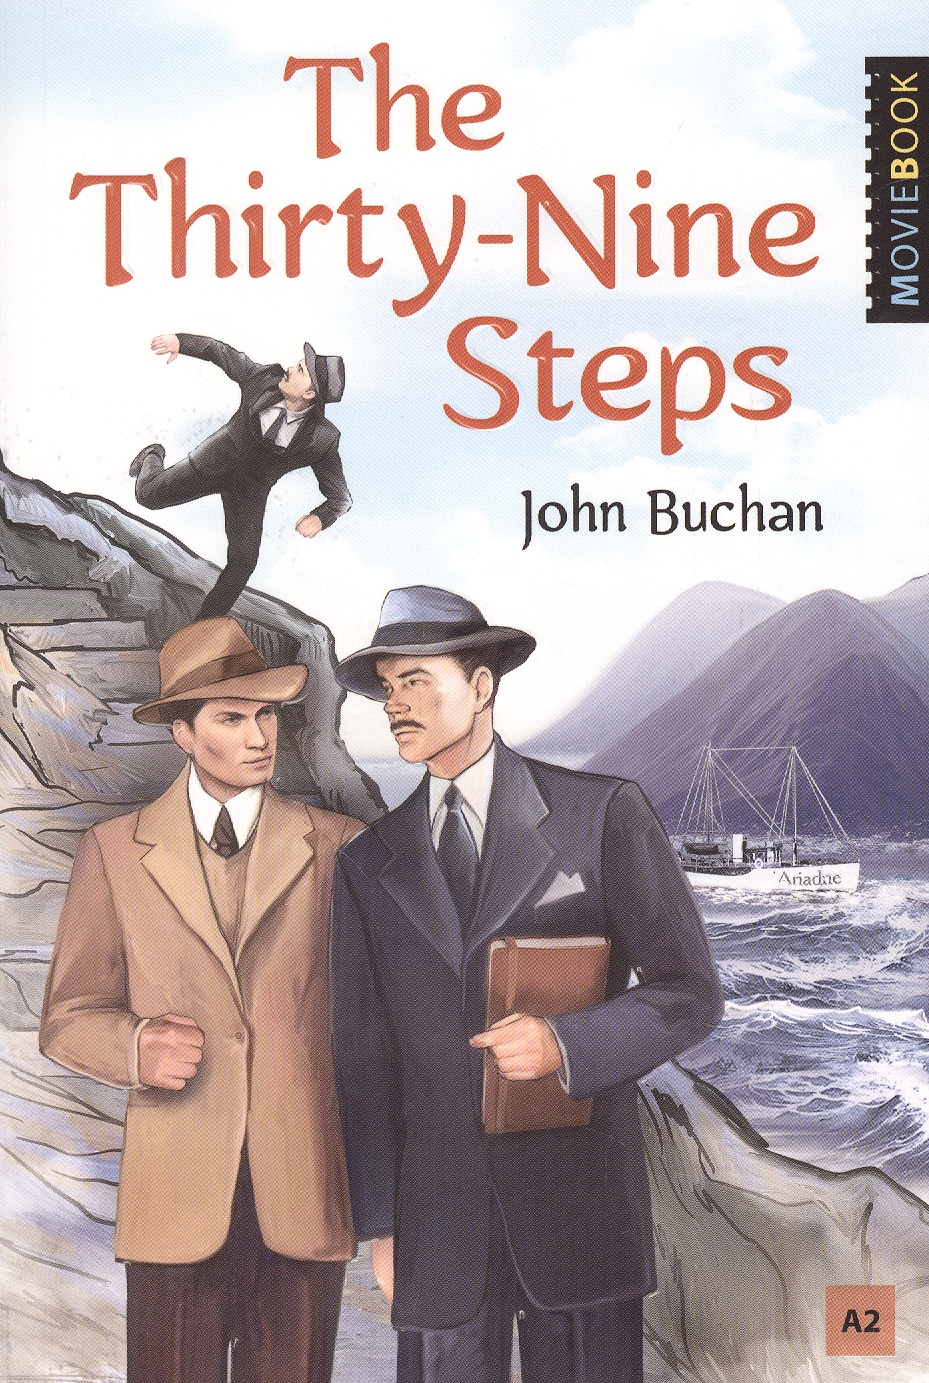 buchan j the thirty nine steps уровень а2 Бакен Джон The Thirty-Nine Steps. Уровень А2